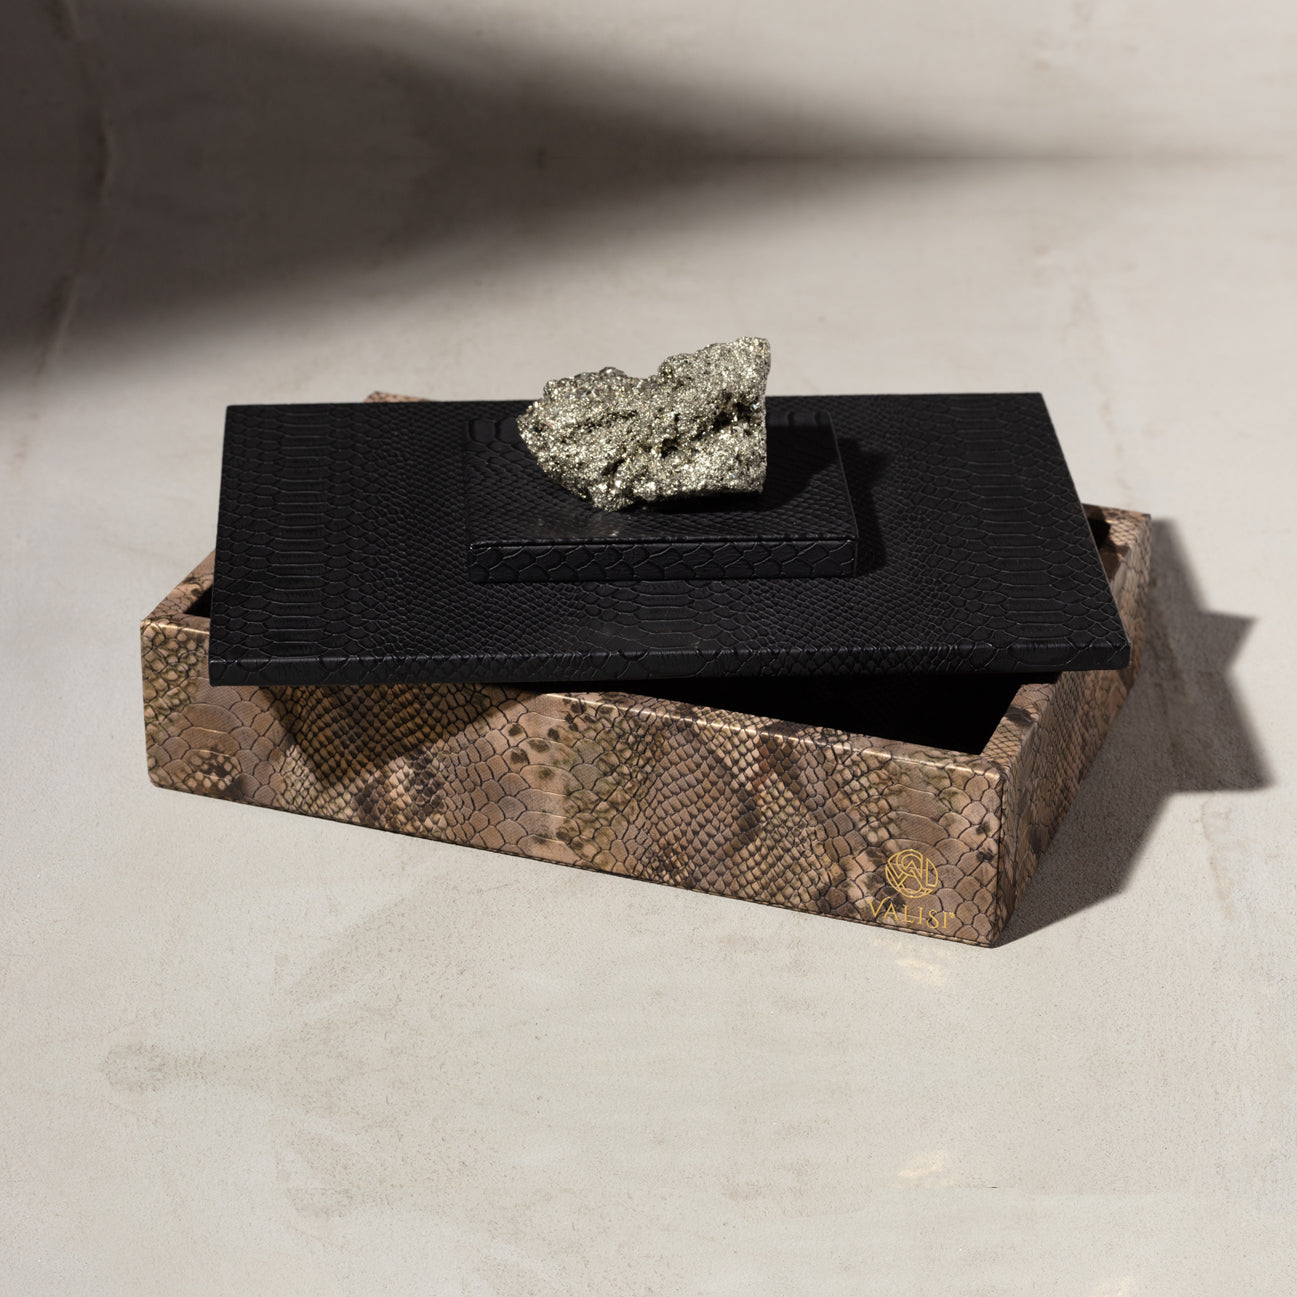 Pyrite Stone Coffee Box